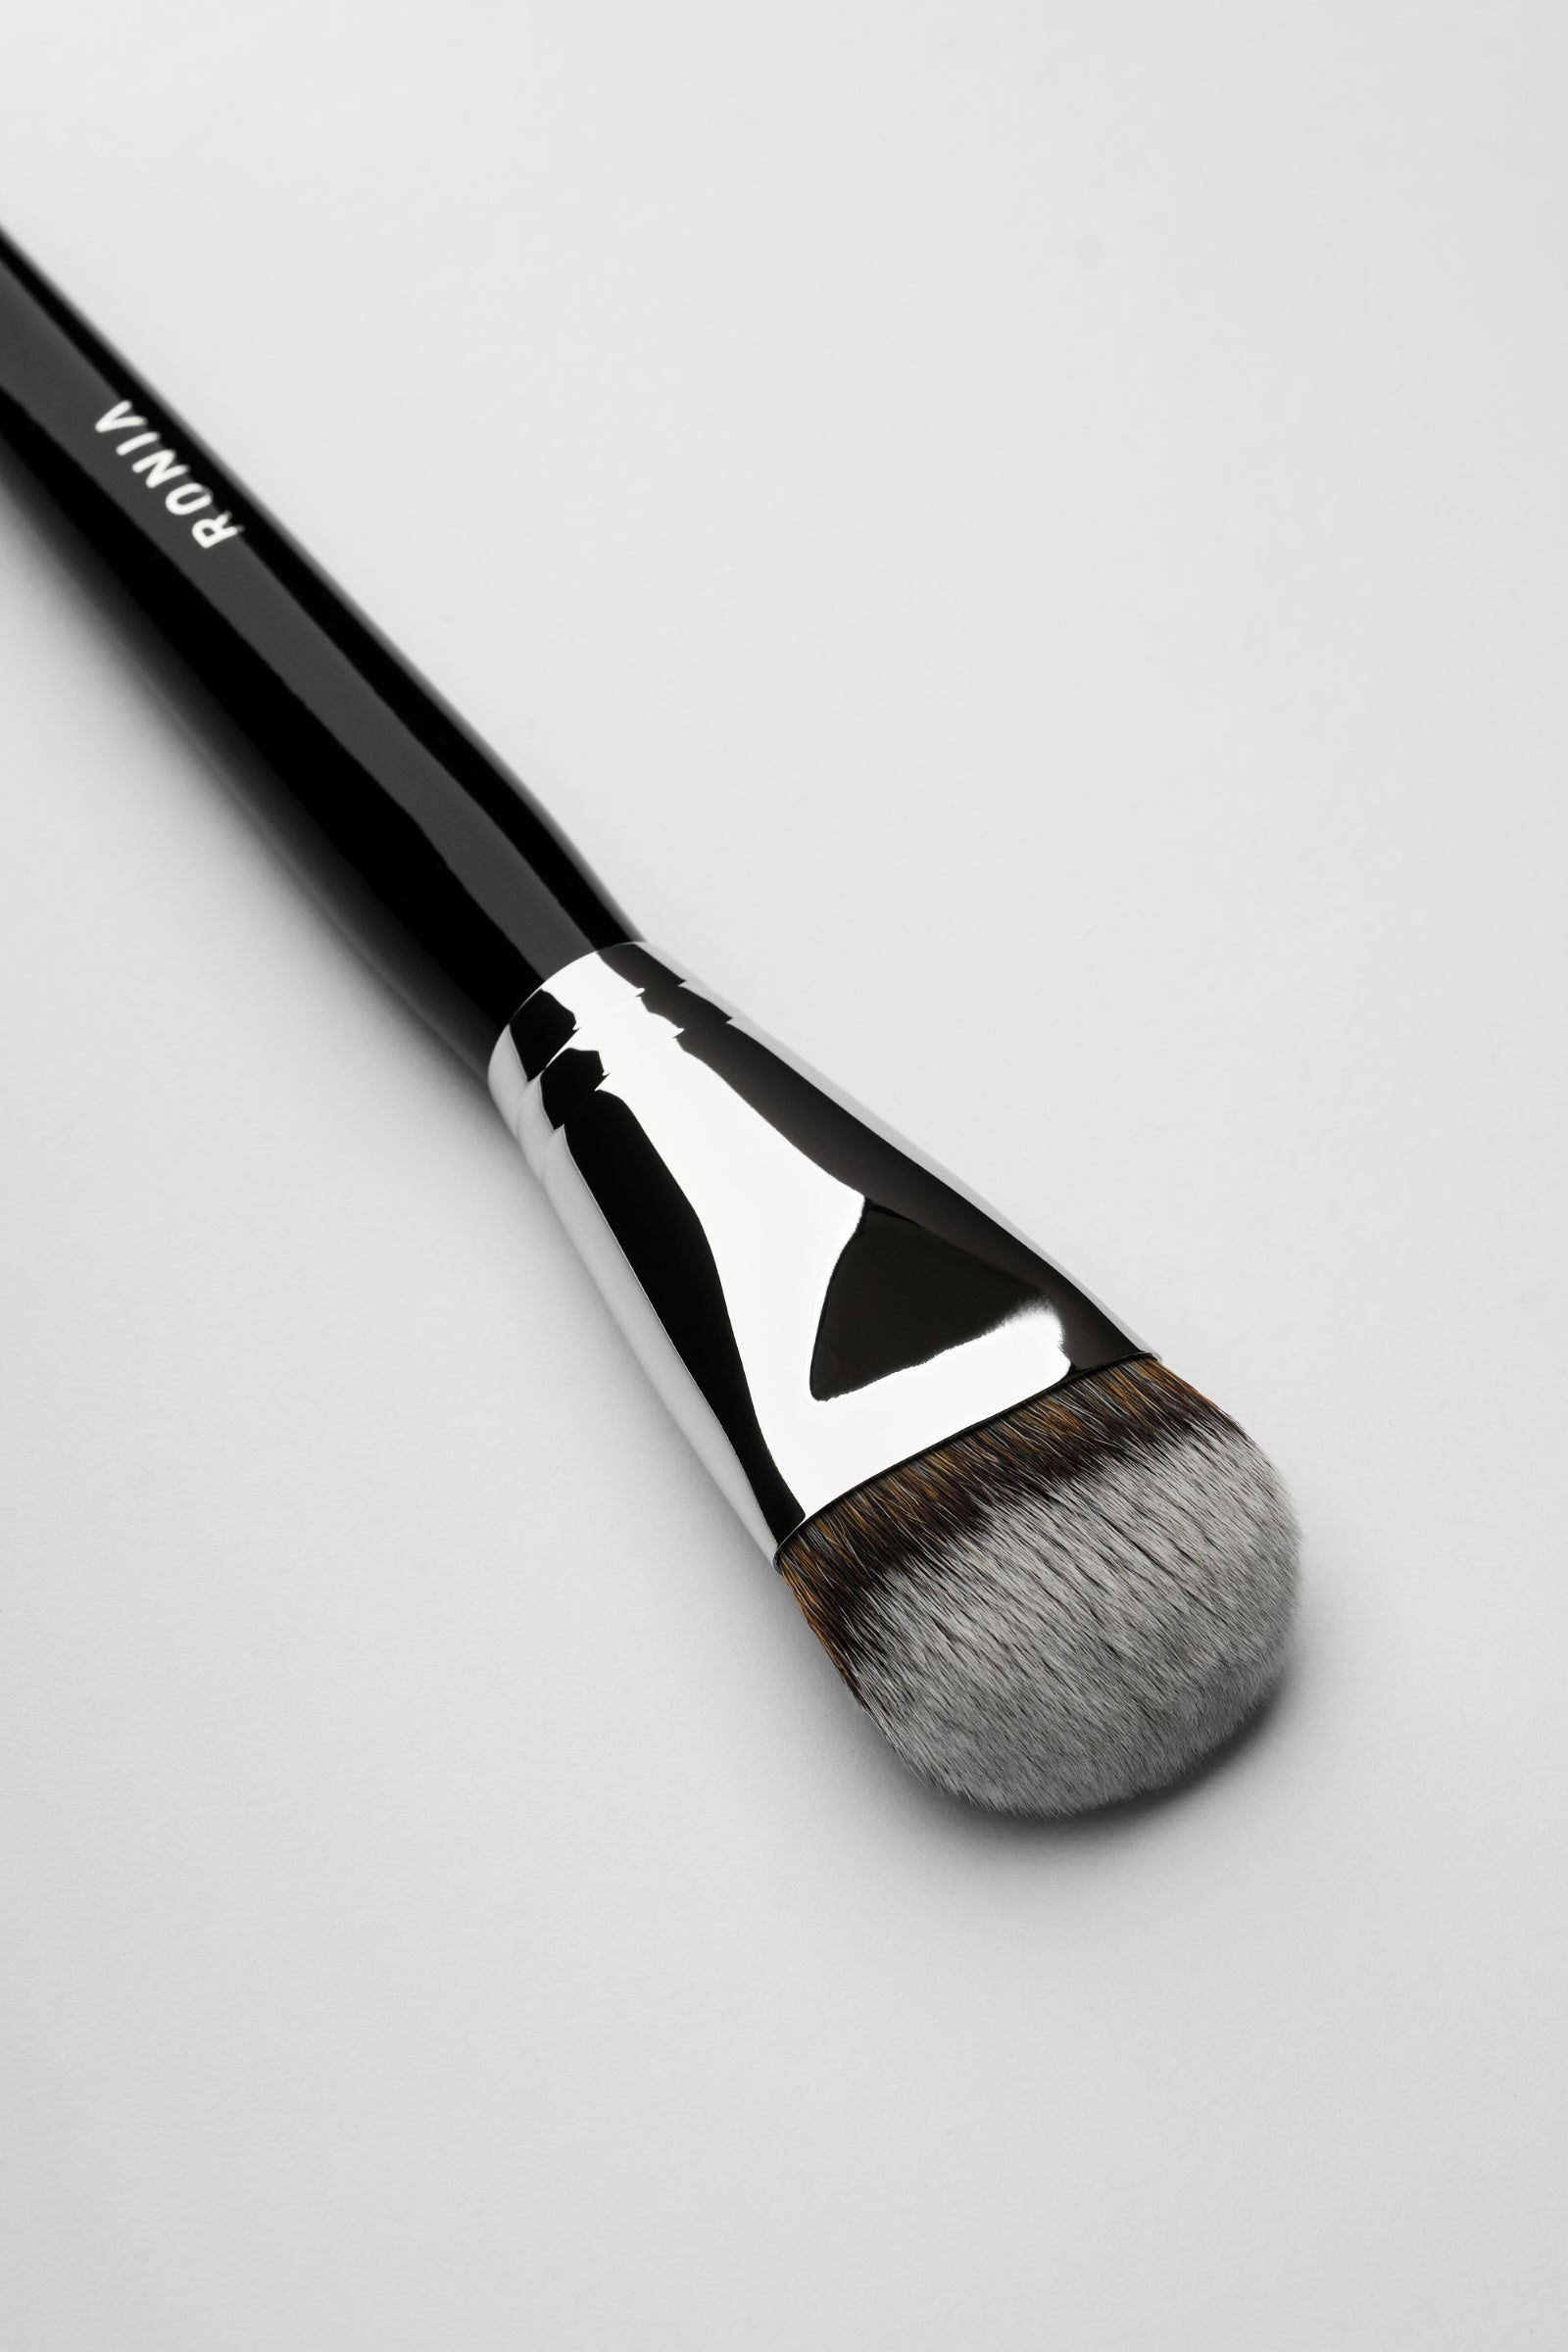  Foundation makeup brush